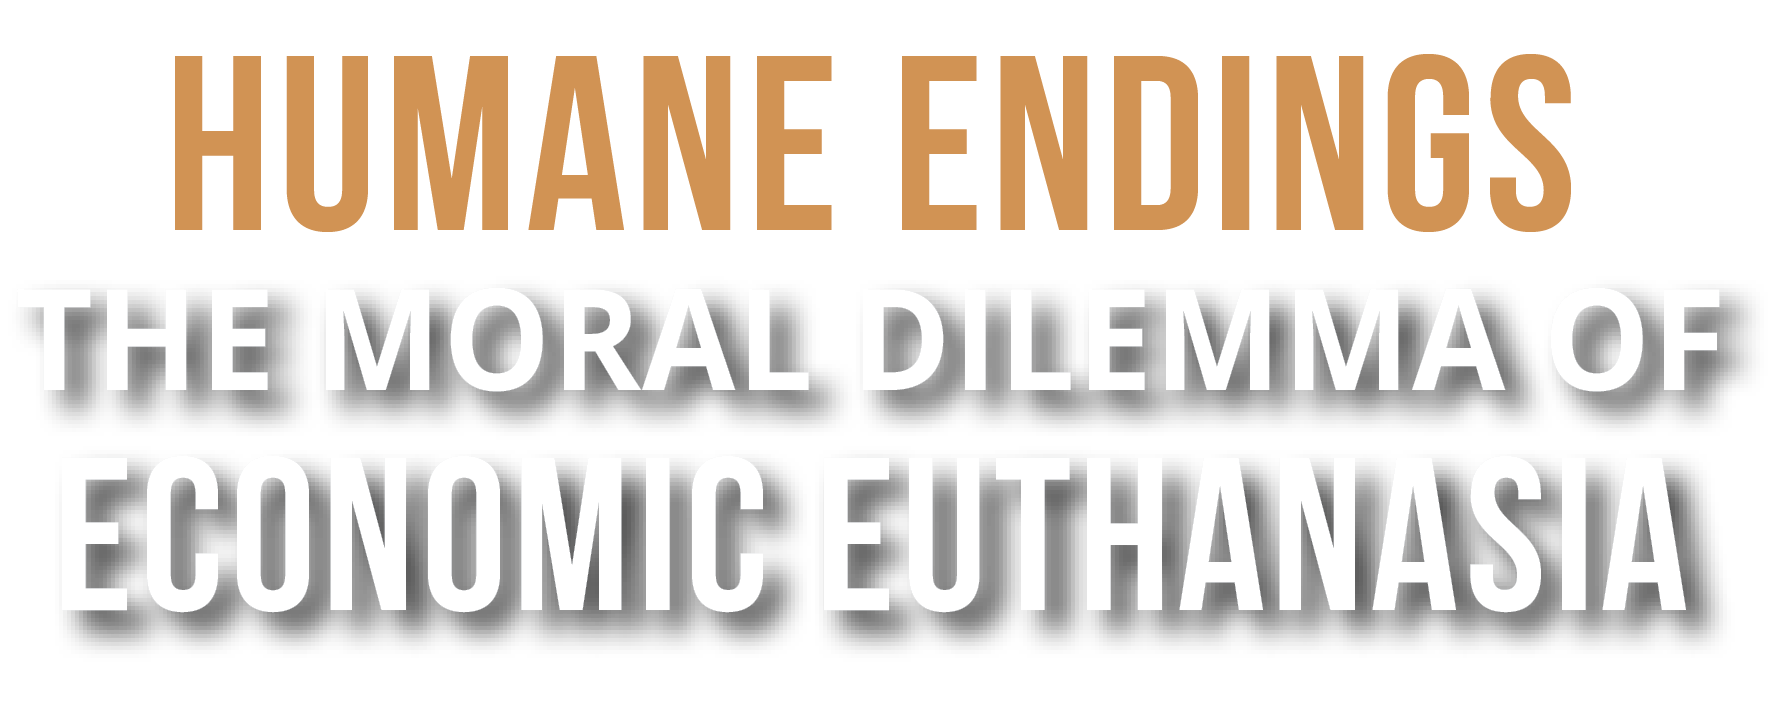 Humane Endings The Moral Dilemma of Economic Euthanasia